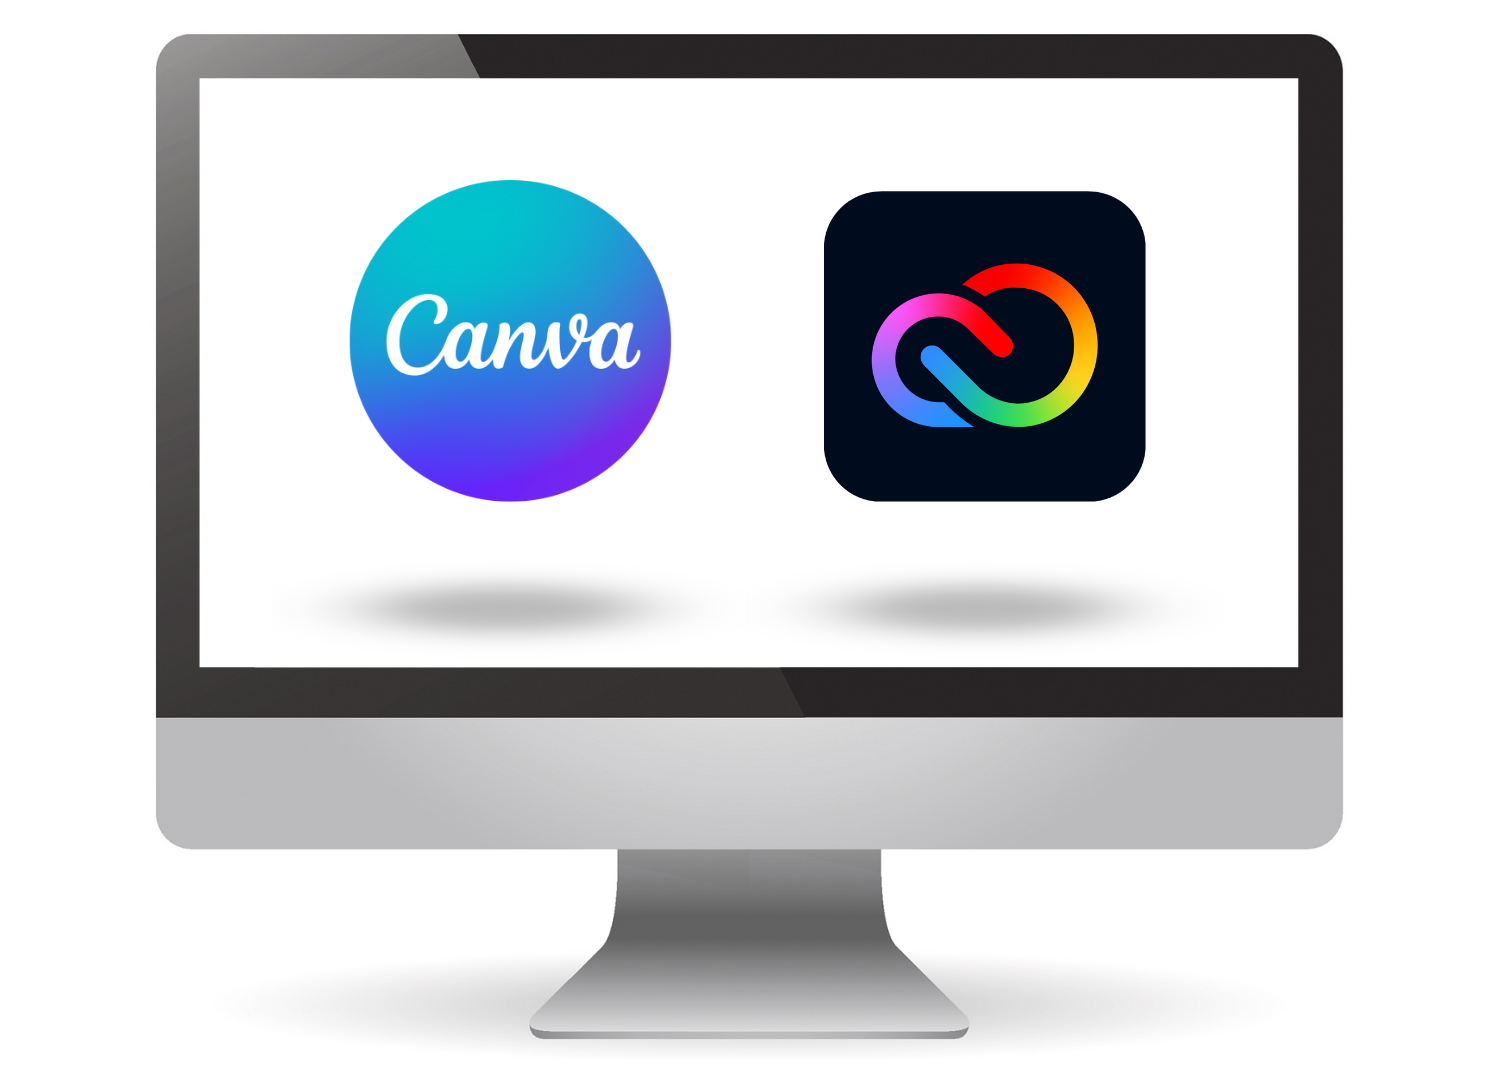 Canva and Adobe Creative Cloud Express Logos